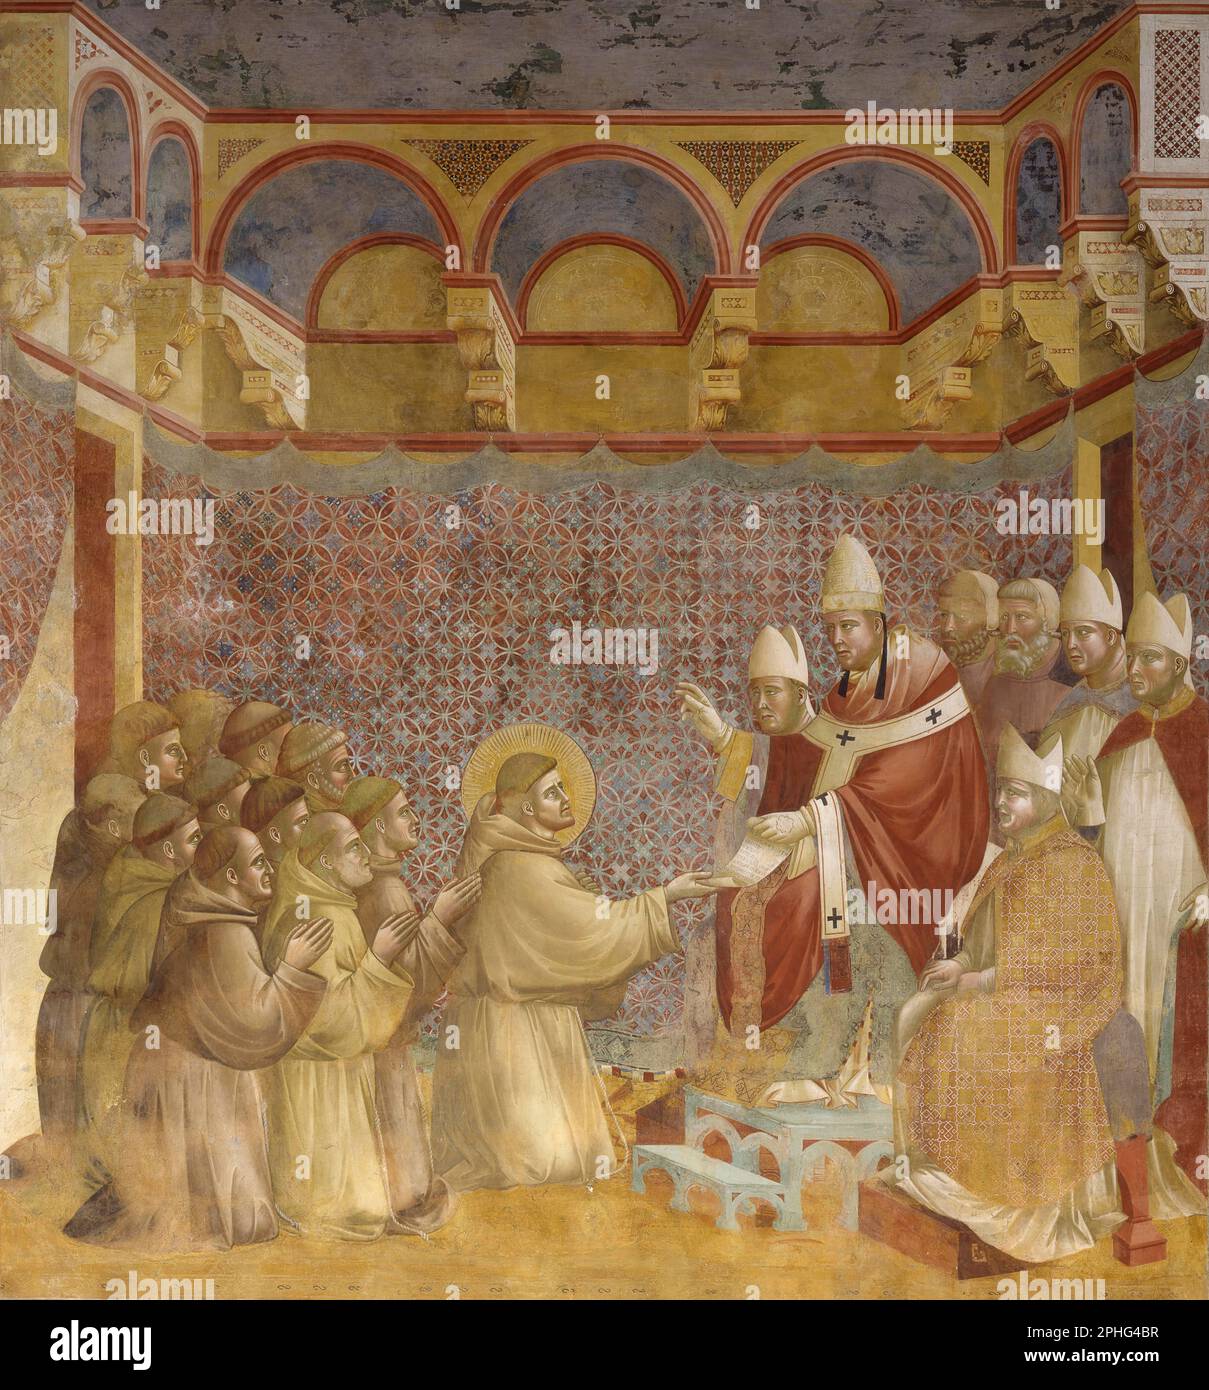 Giotto di Bondone/fresco, Basilica di San Francesco d'Assisi, Assisi, Italia. Leggenda di San Francesco, Conferma della regola dell'Ordine di San Francesco, 1297 - 1299 ,270 x 230 cm. Foto Stock